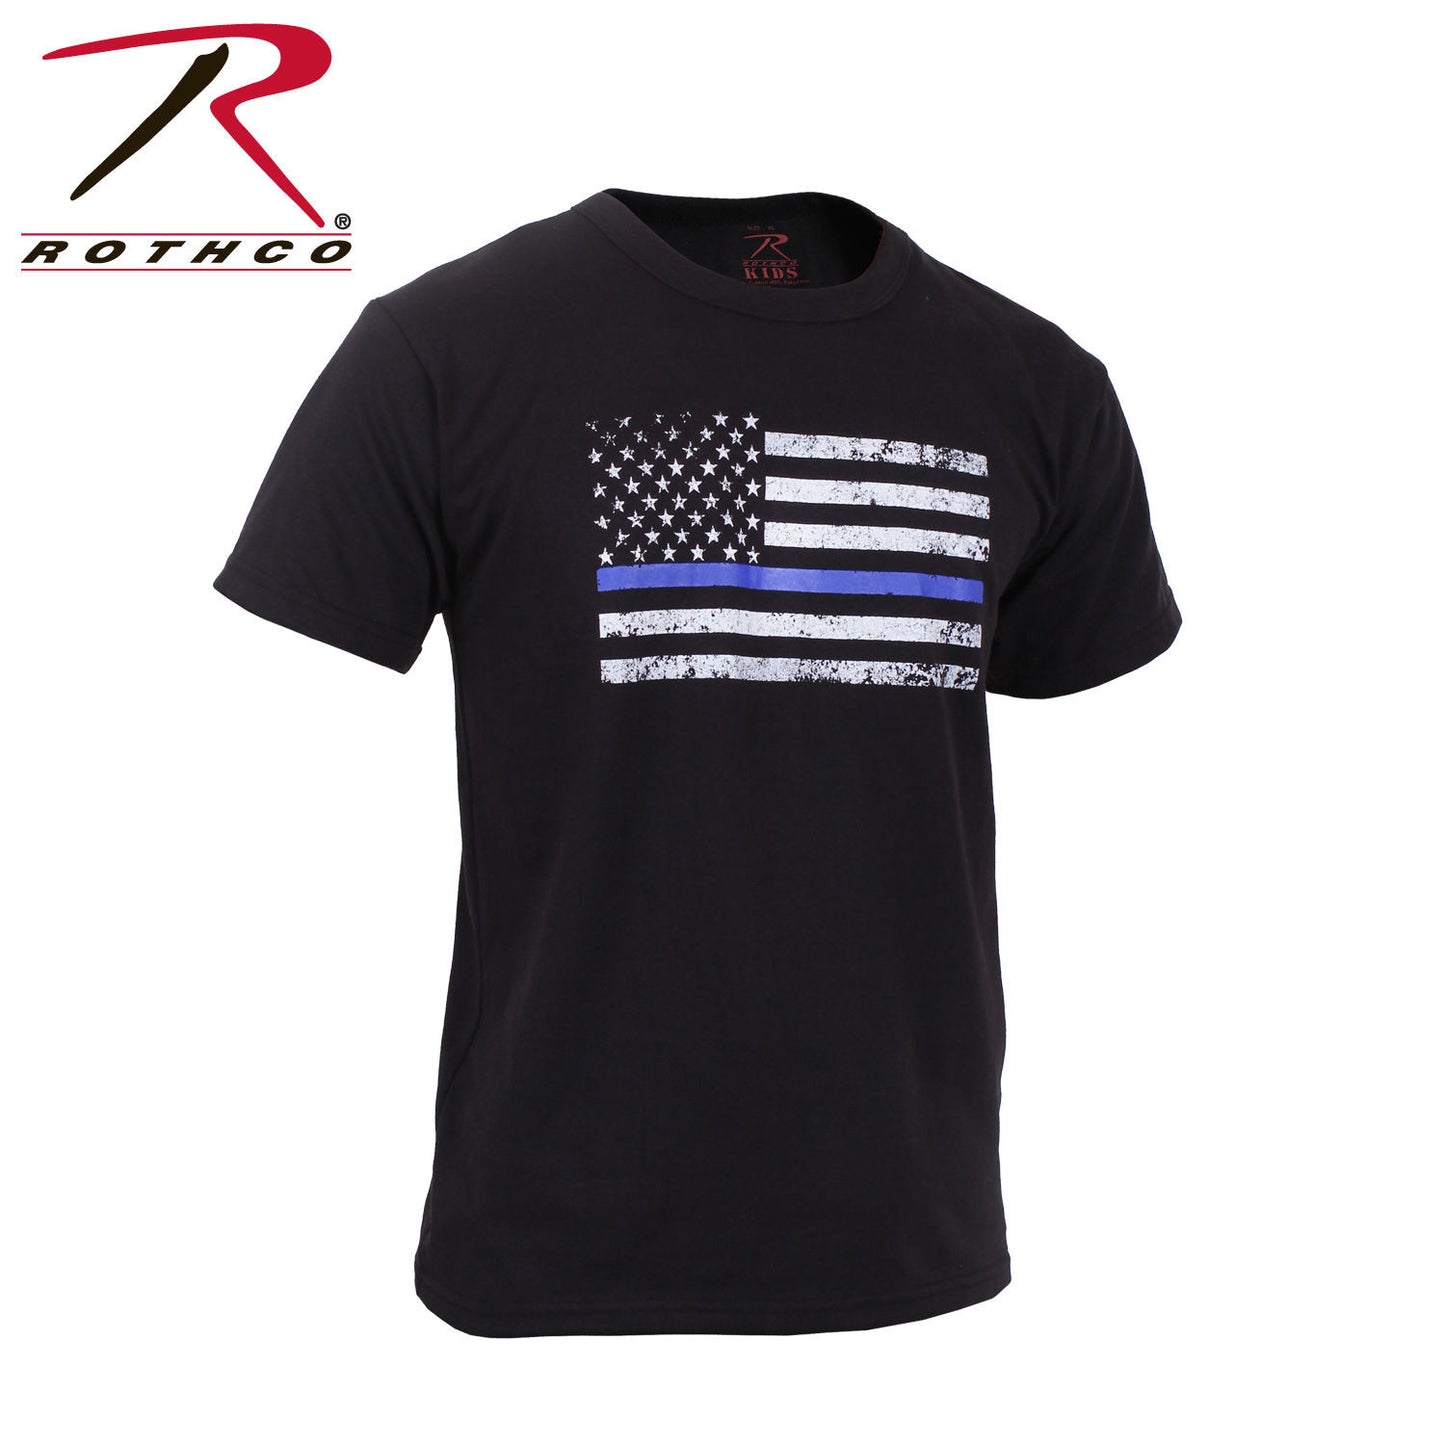 Kids Thin Blue Line US Flag Tee - Rothco TBL T-Shirt